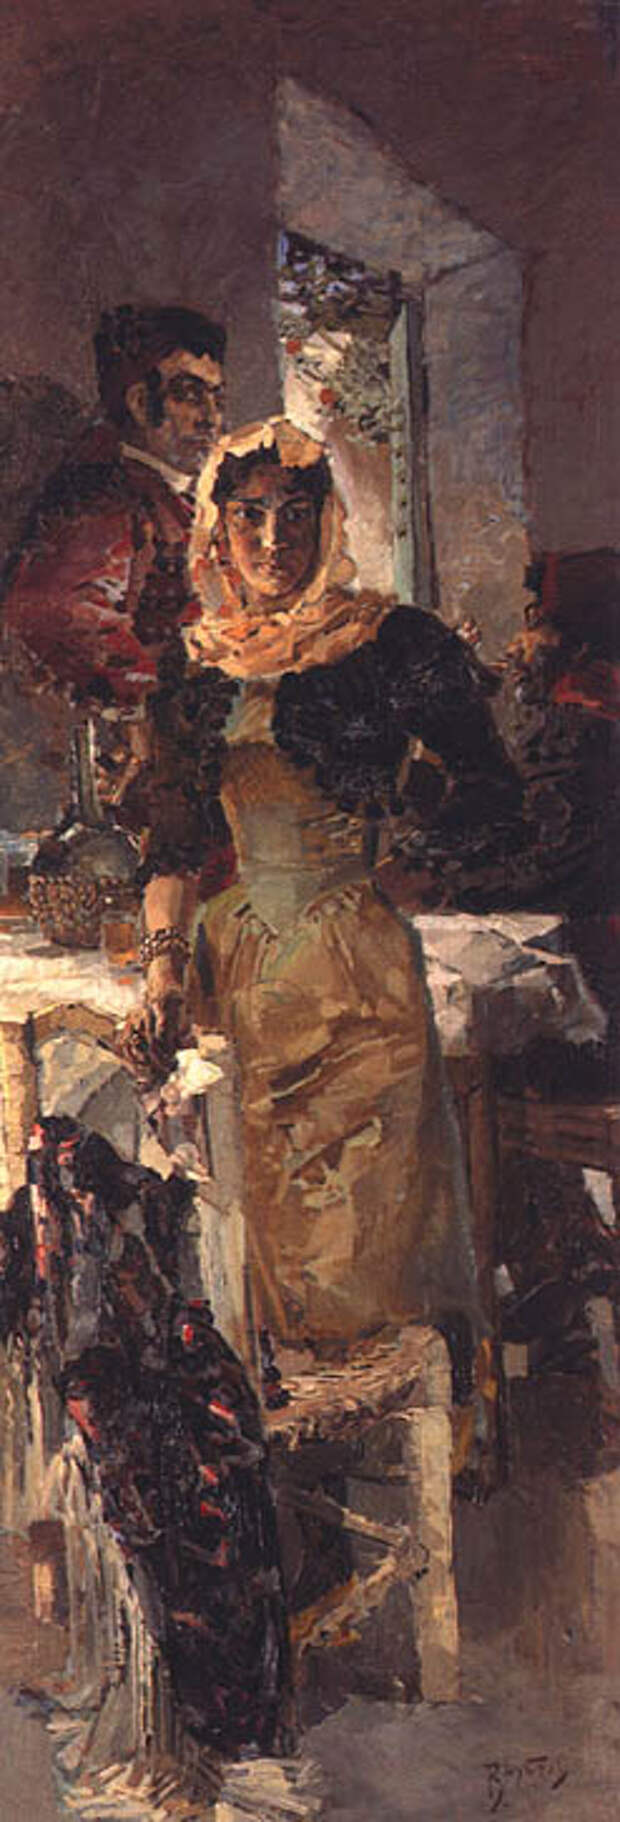 М. Врубель. Испанка  1894